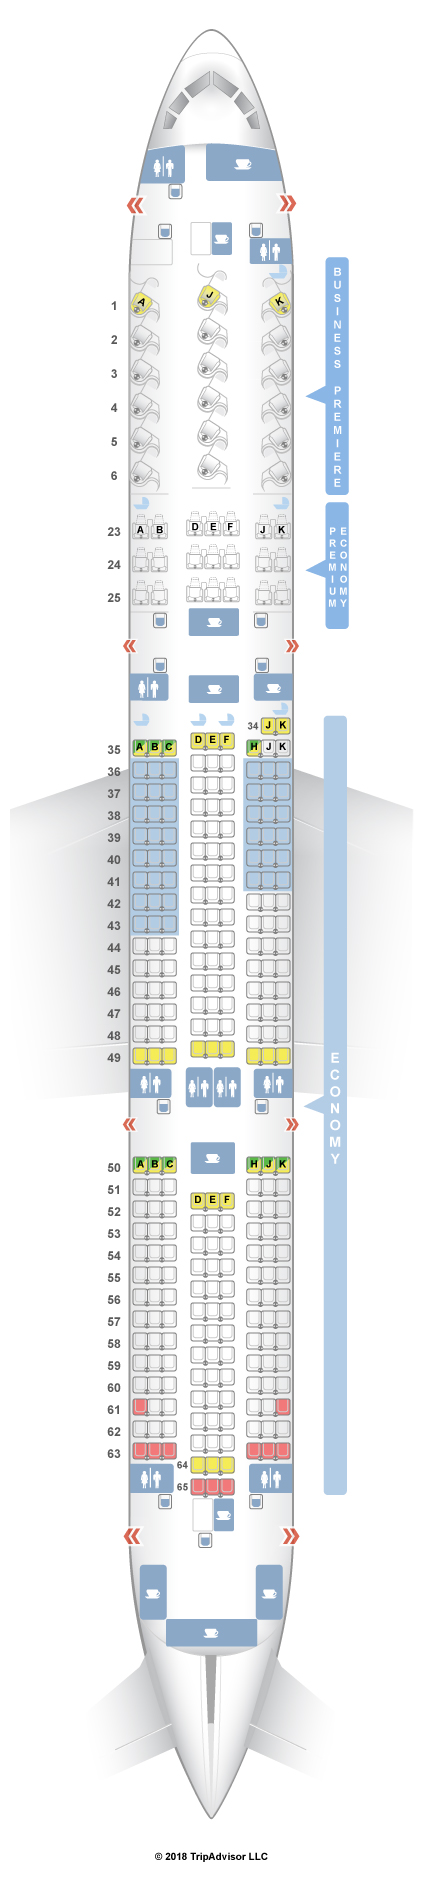 air canada seat map 787 9